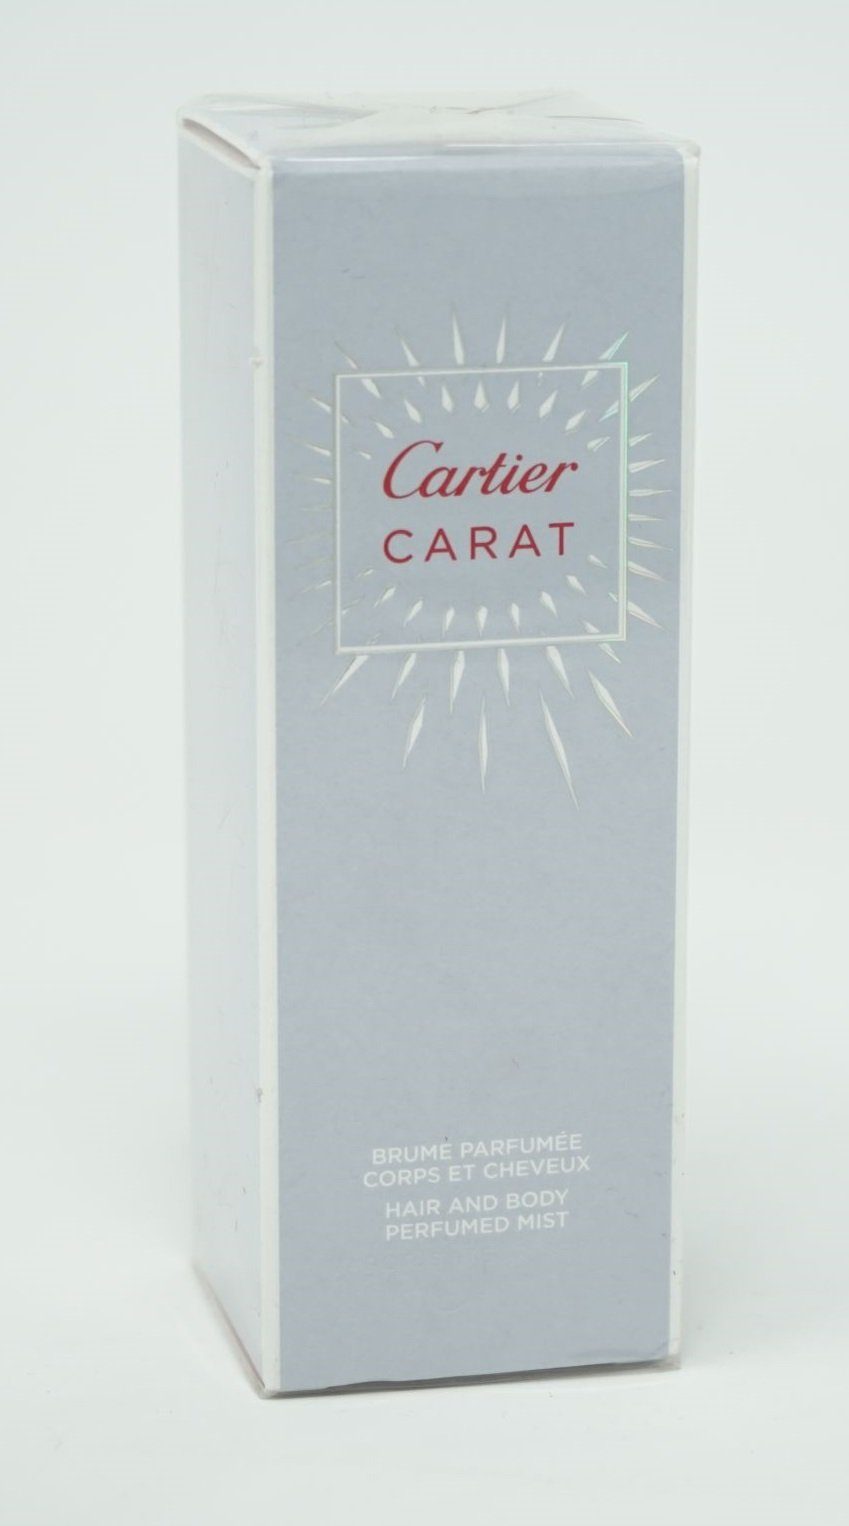 Cartier Körperspray Cartier Carat Hair and Body Perfumed Mist 100ml | Körpersprays